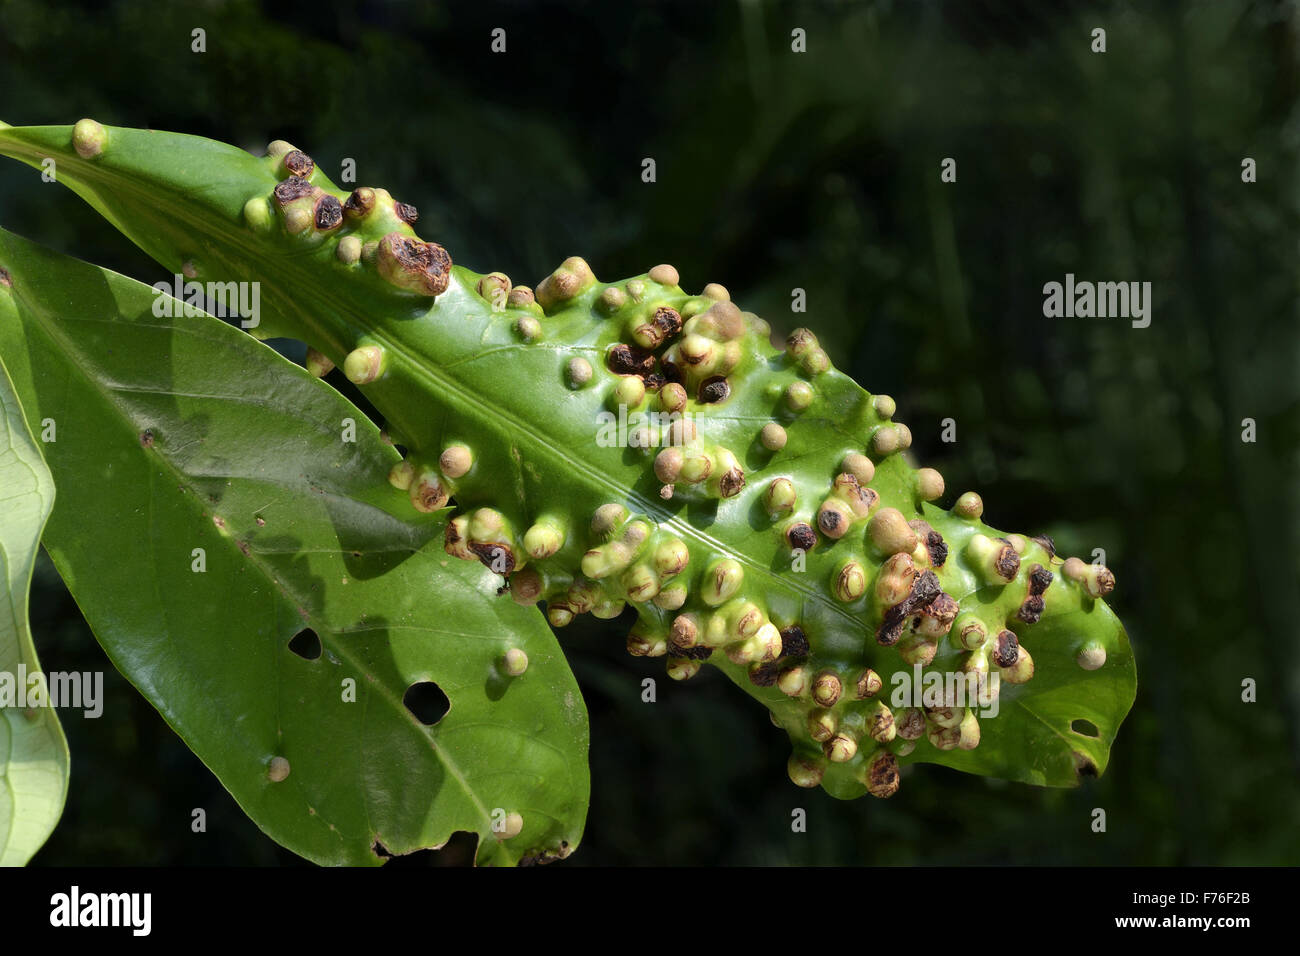 Leaf blister, leaf curl, trivandrum, kerala, india, asia Stock Photo